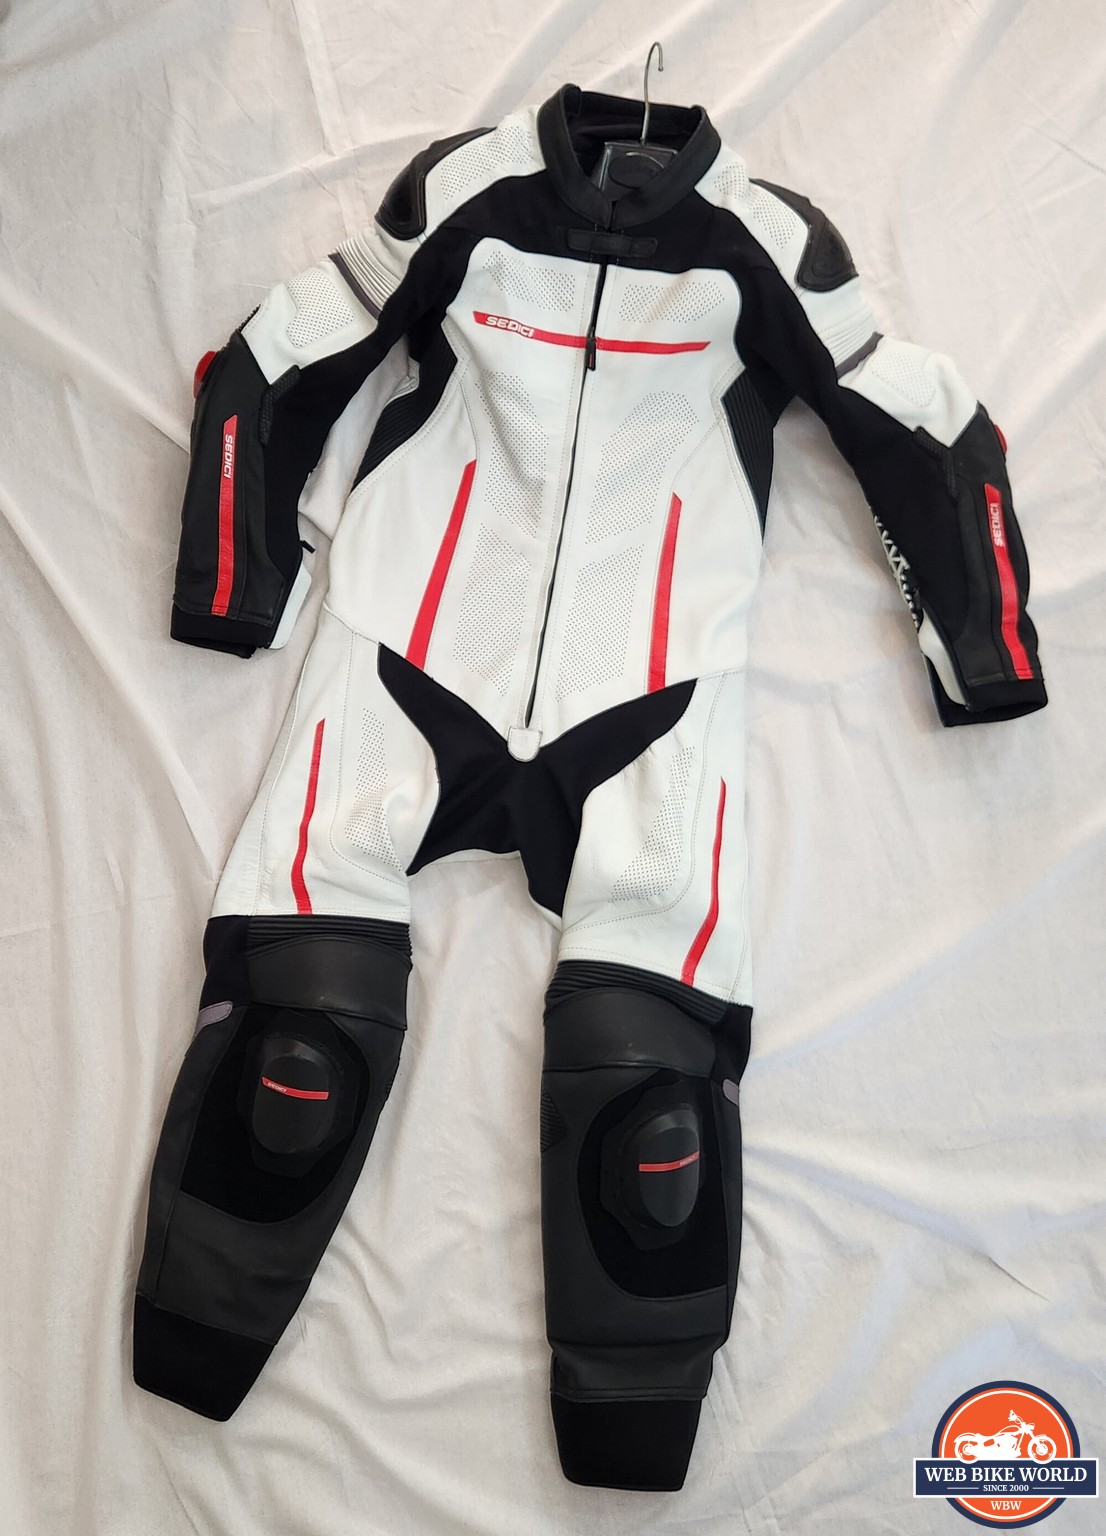 Front view of the Sedici Corsa 1 piece race suit